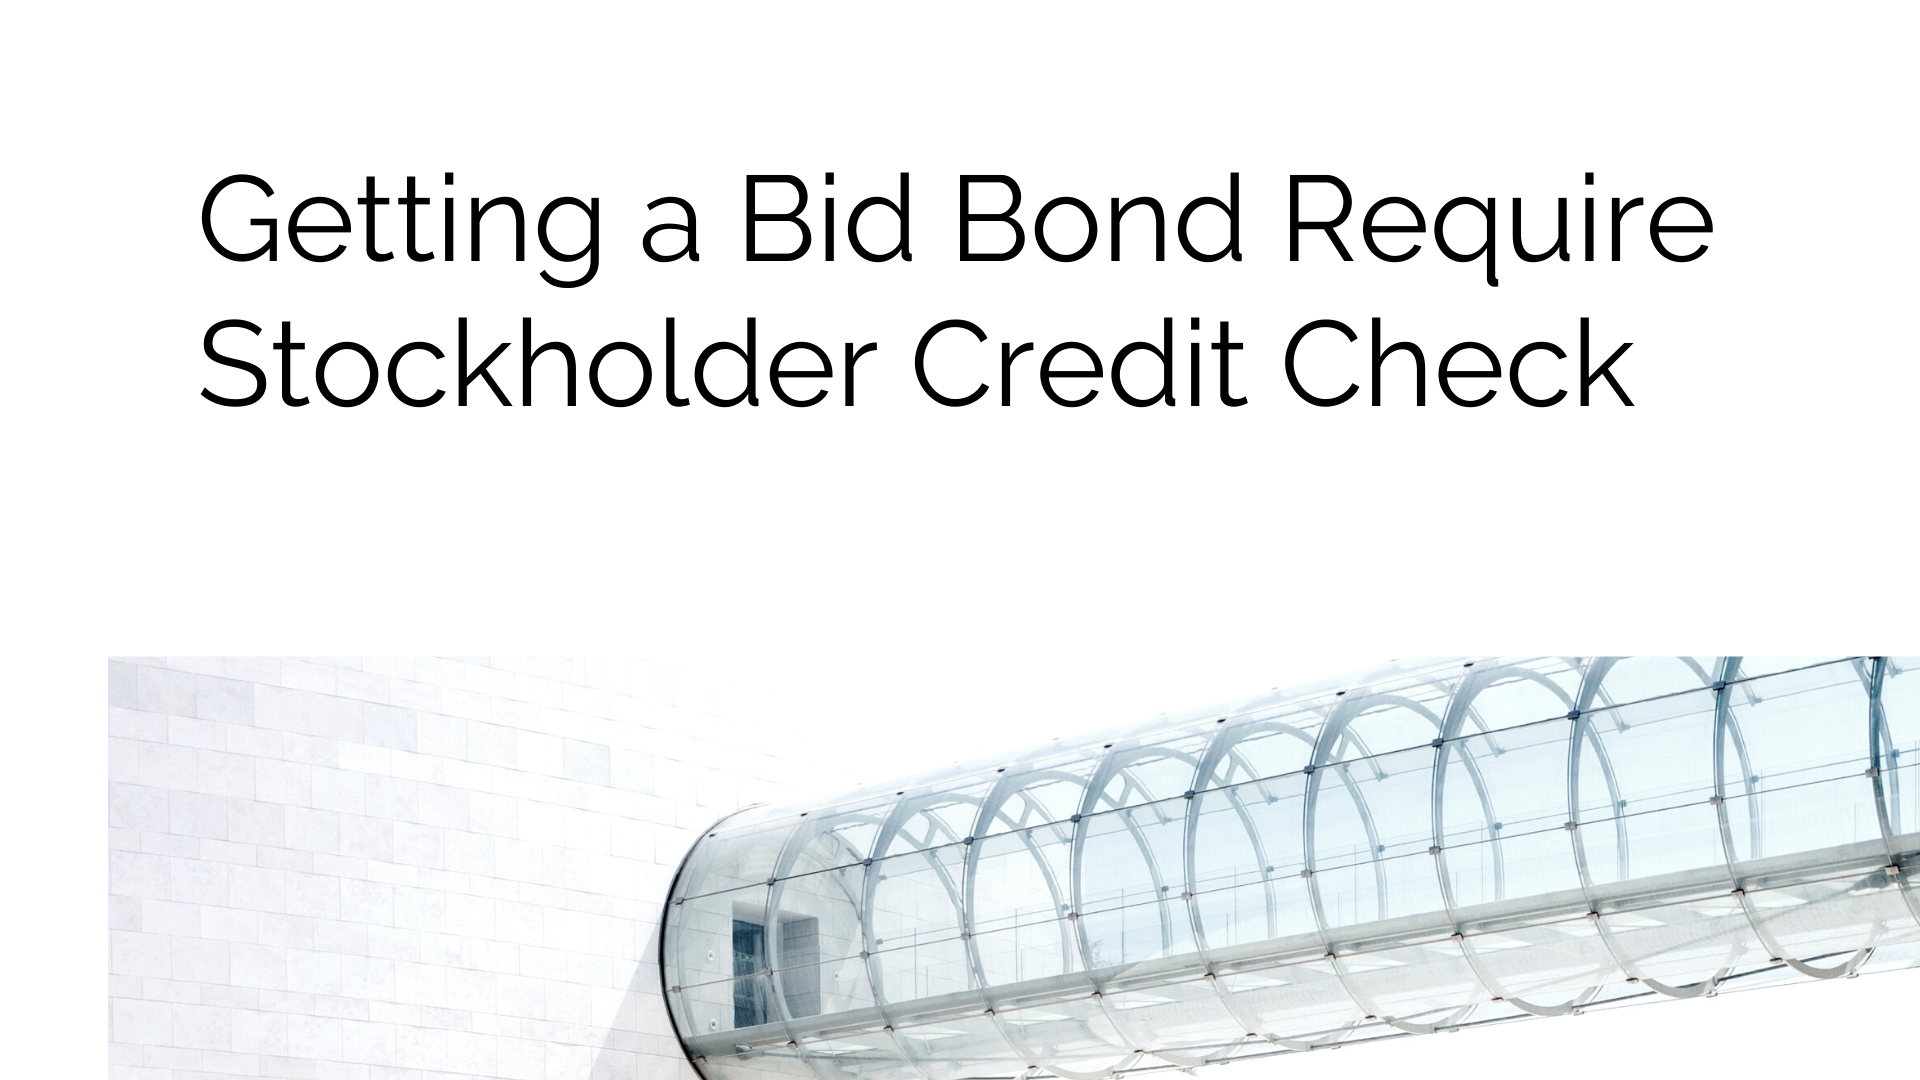 bid bonds - What is a bid bond - glass bridge